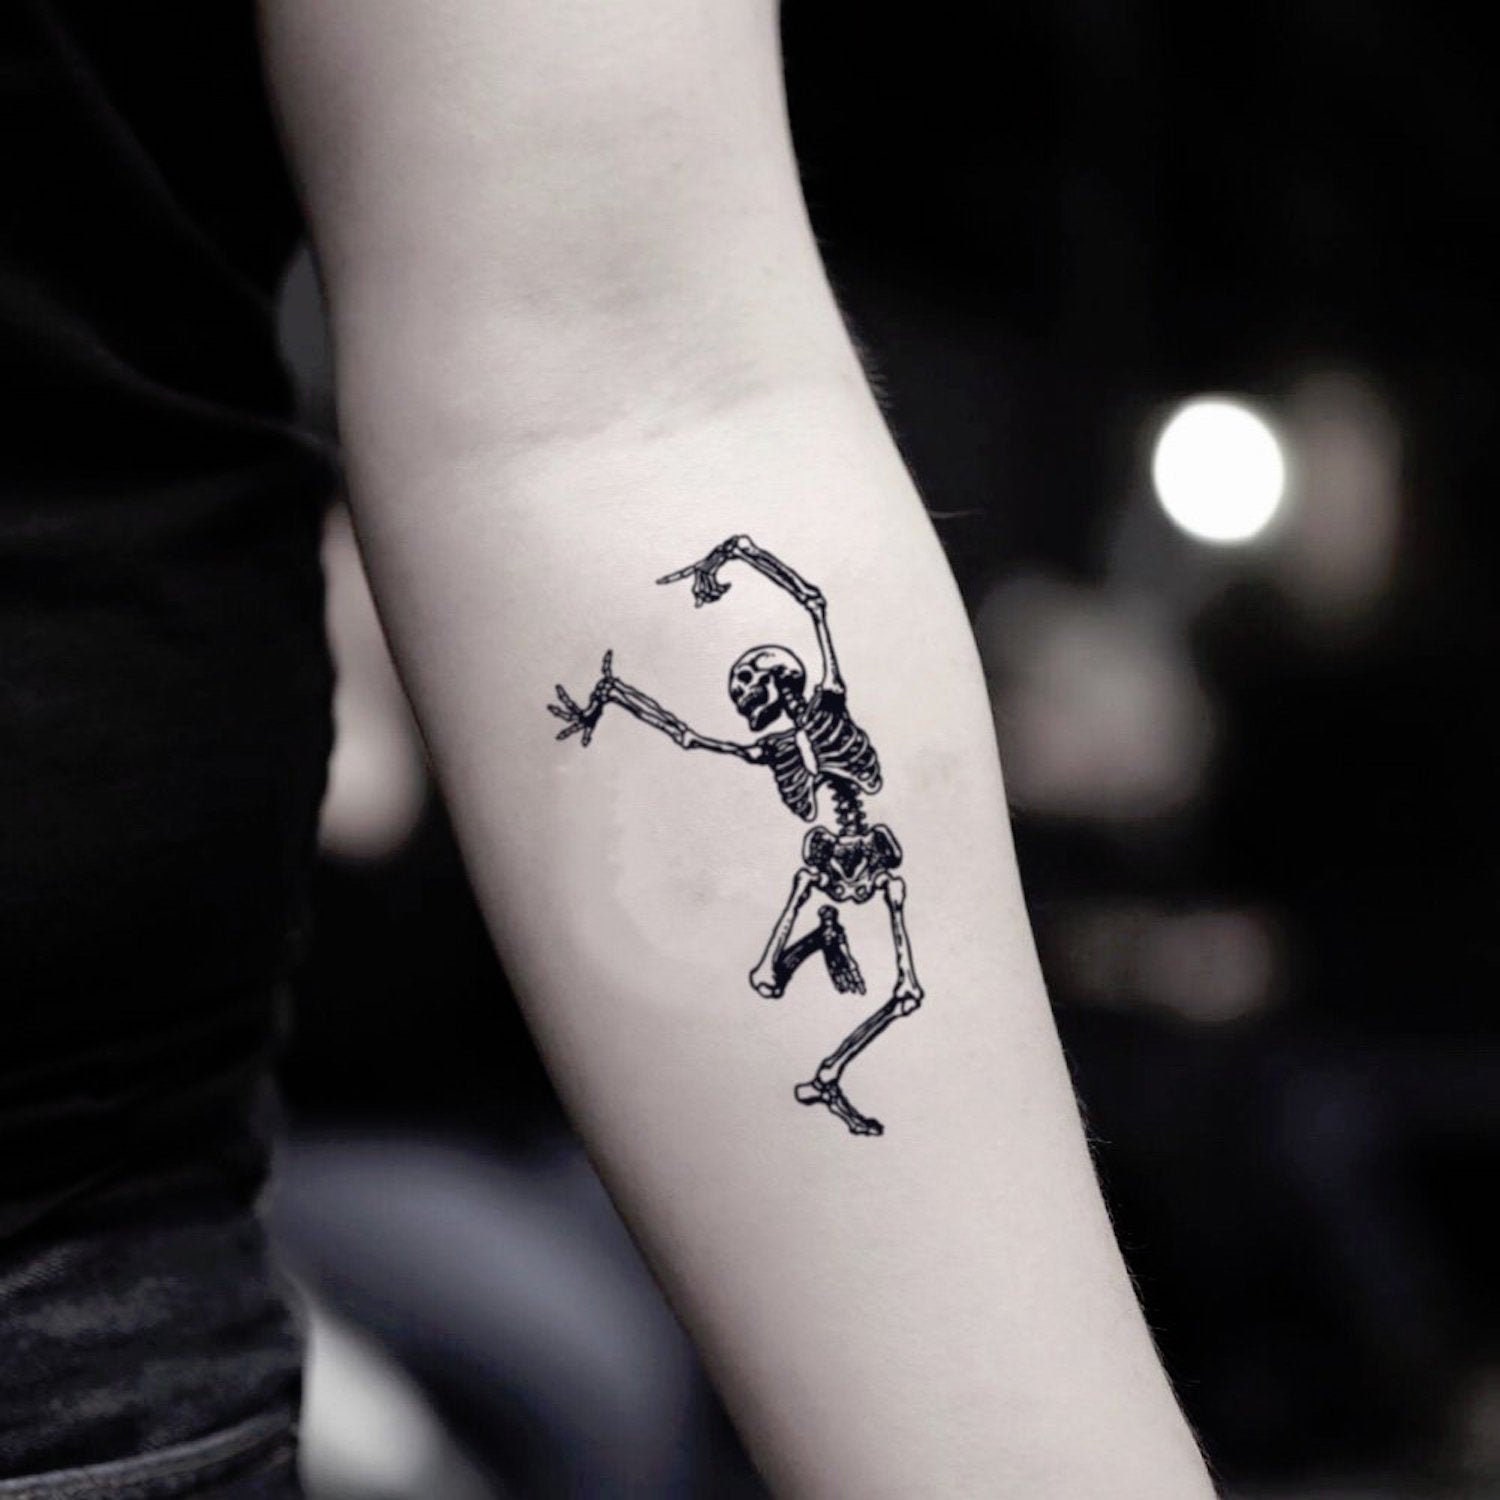 Dancing Skeleton in a Dress Tattoo Design – Tattoos Wizard Designs